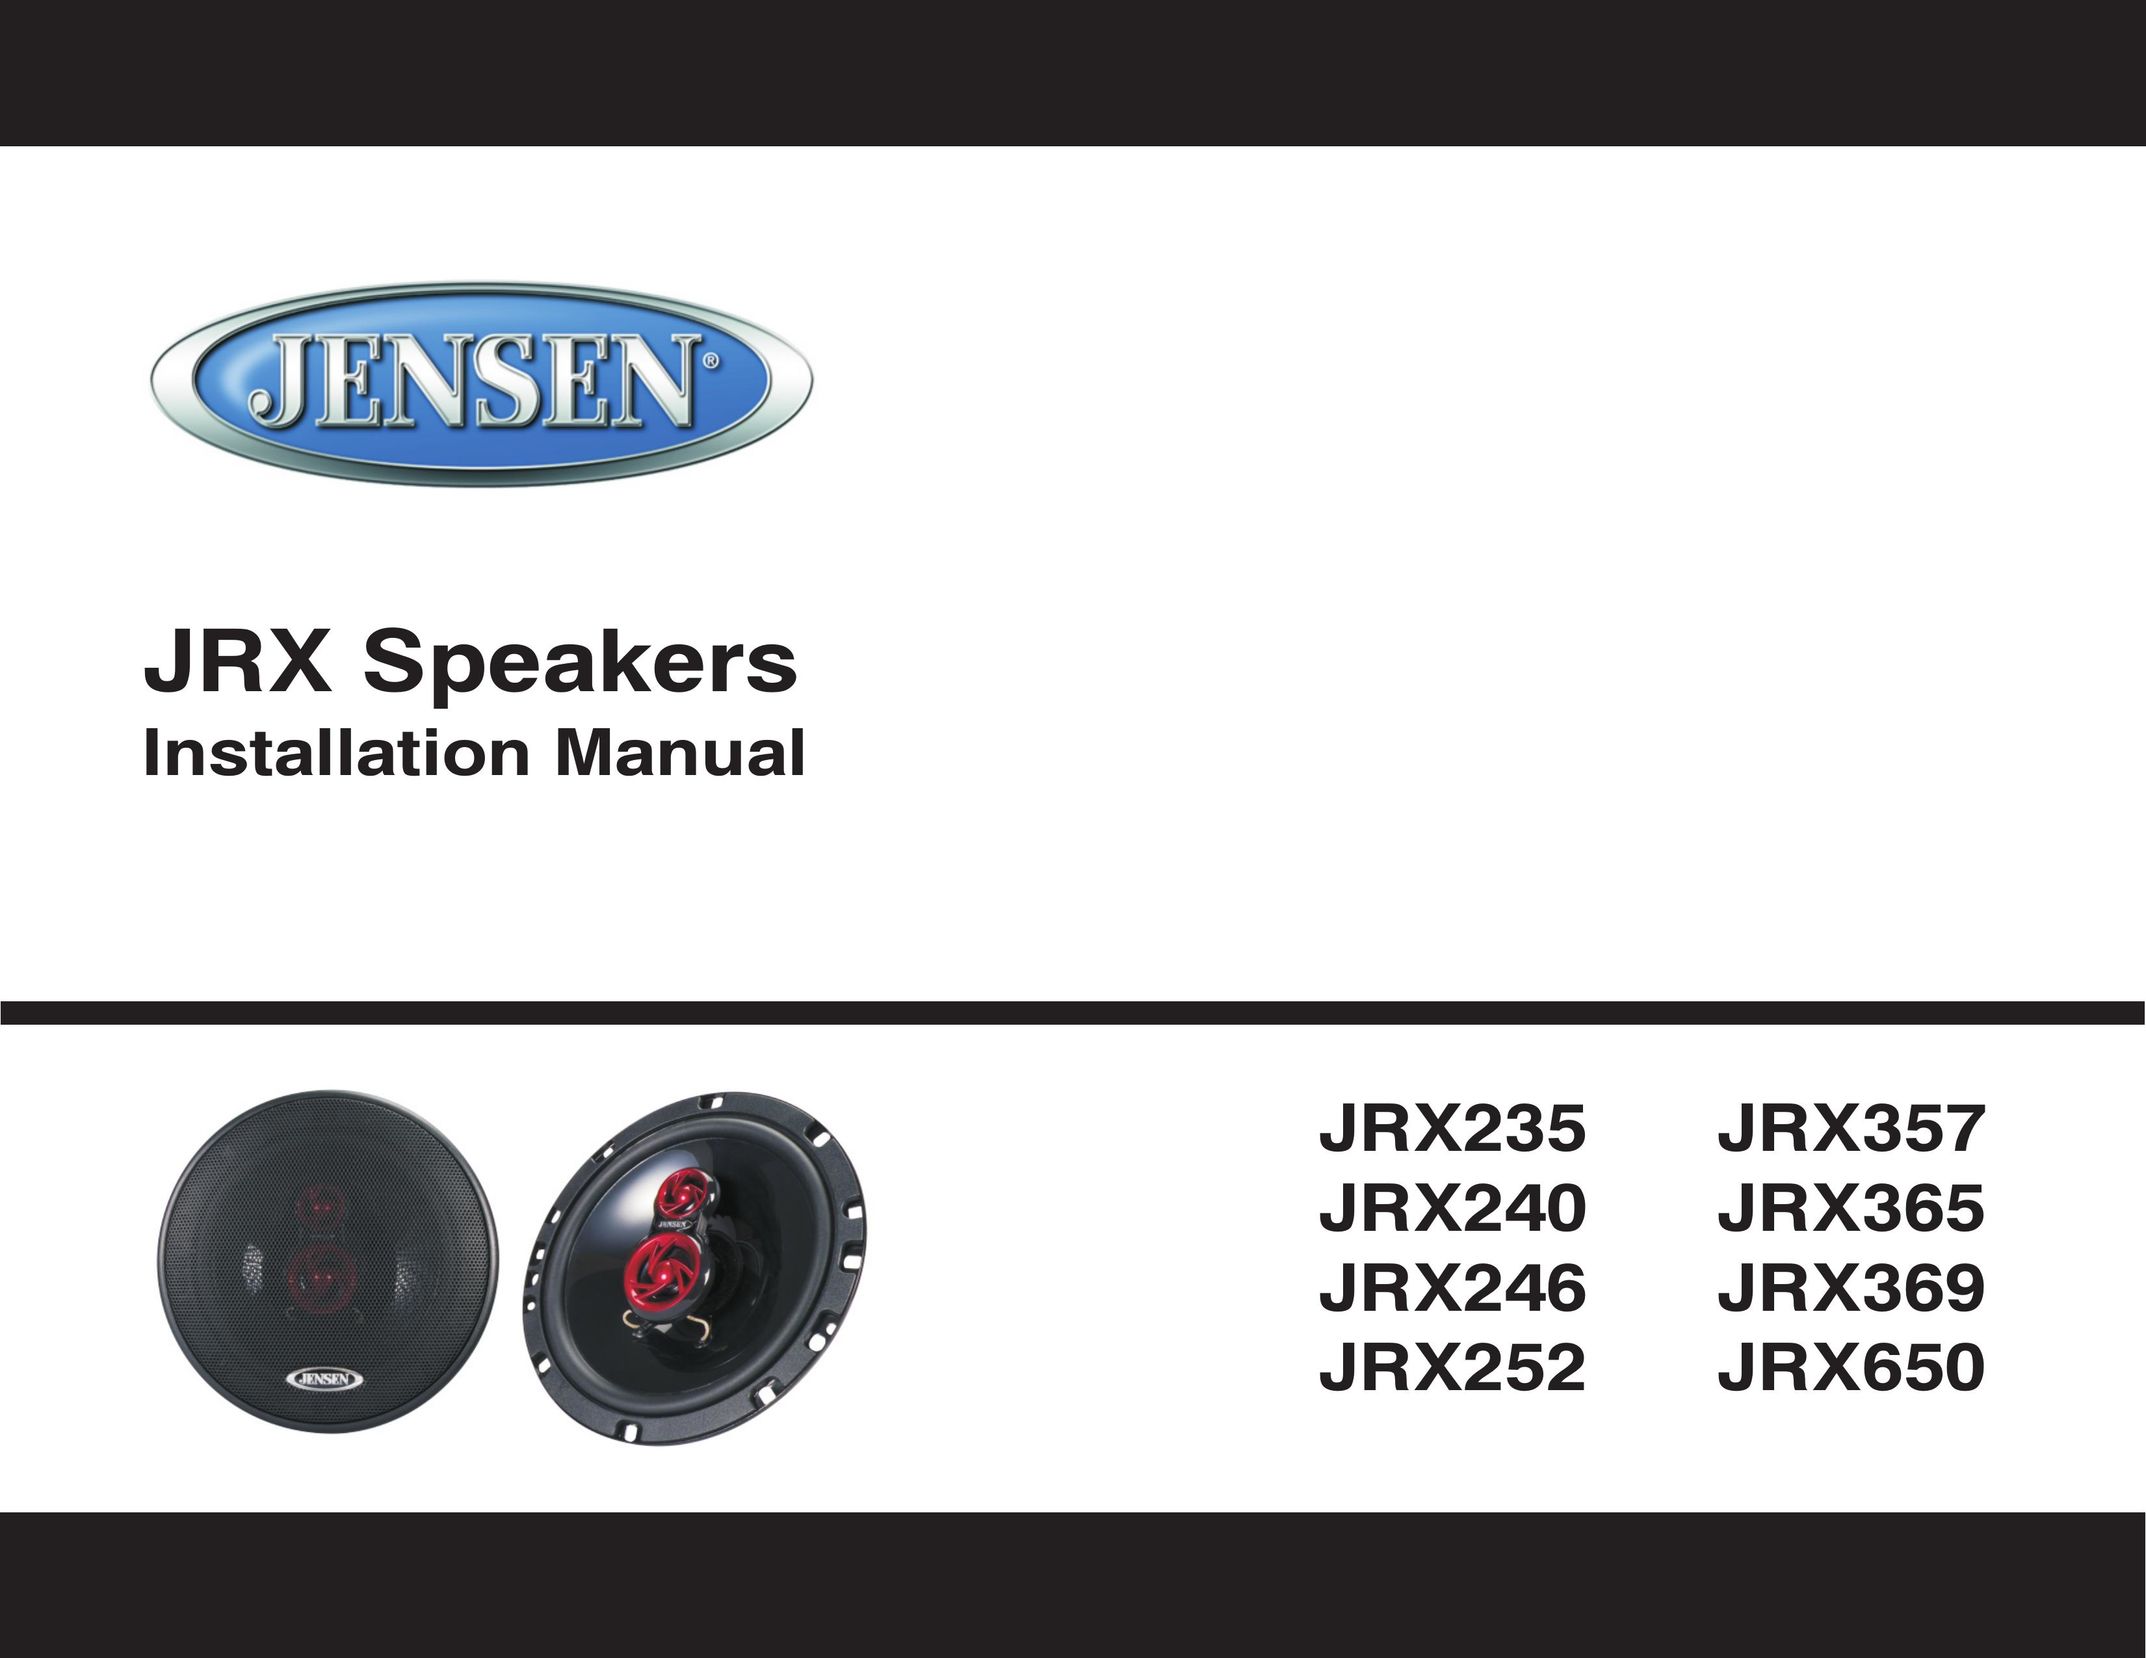 Jensen JRX357 Car Speaker User Manual